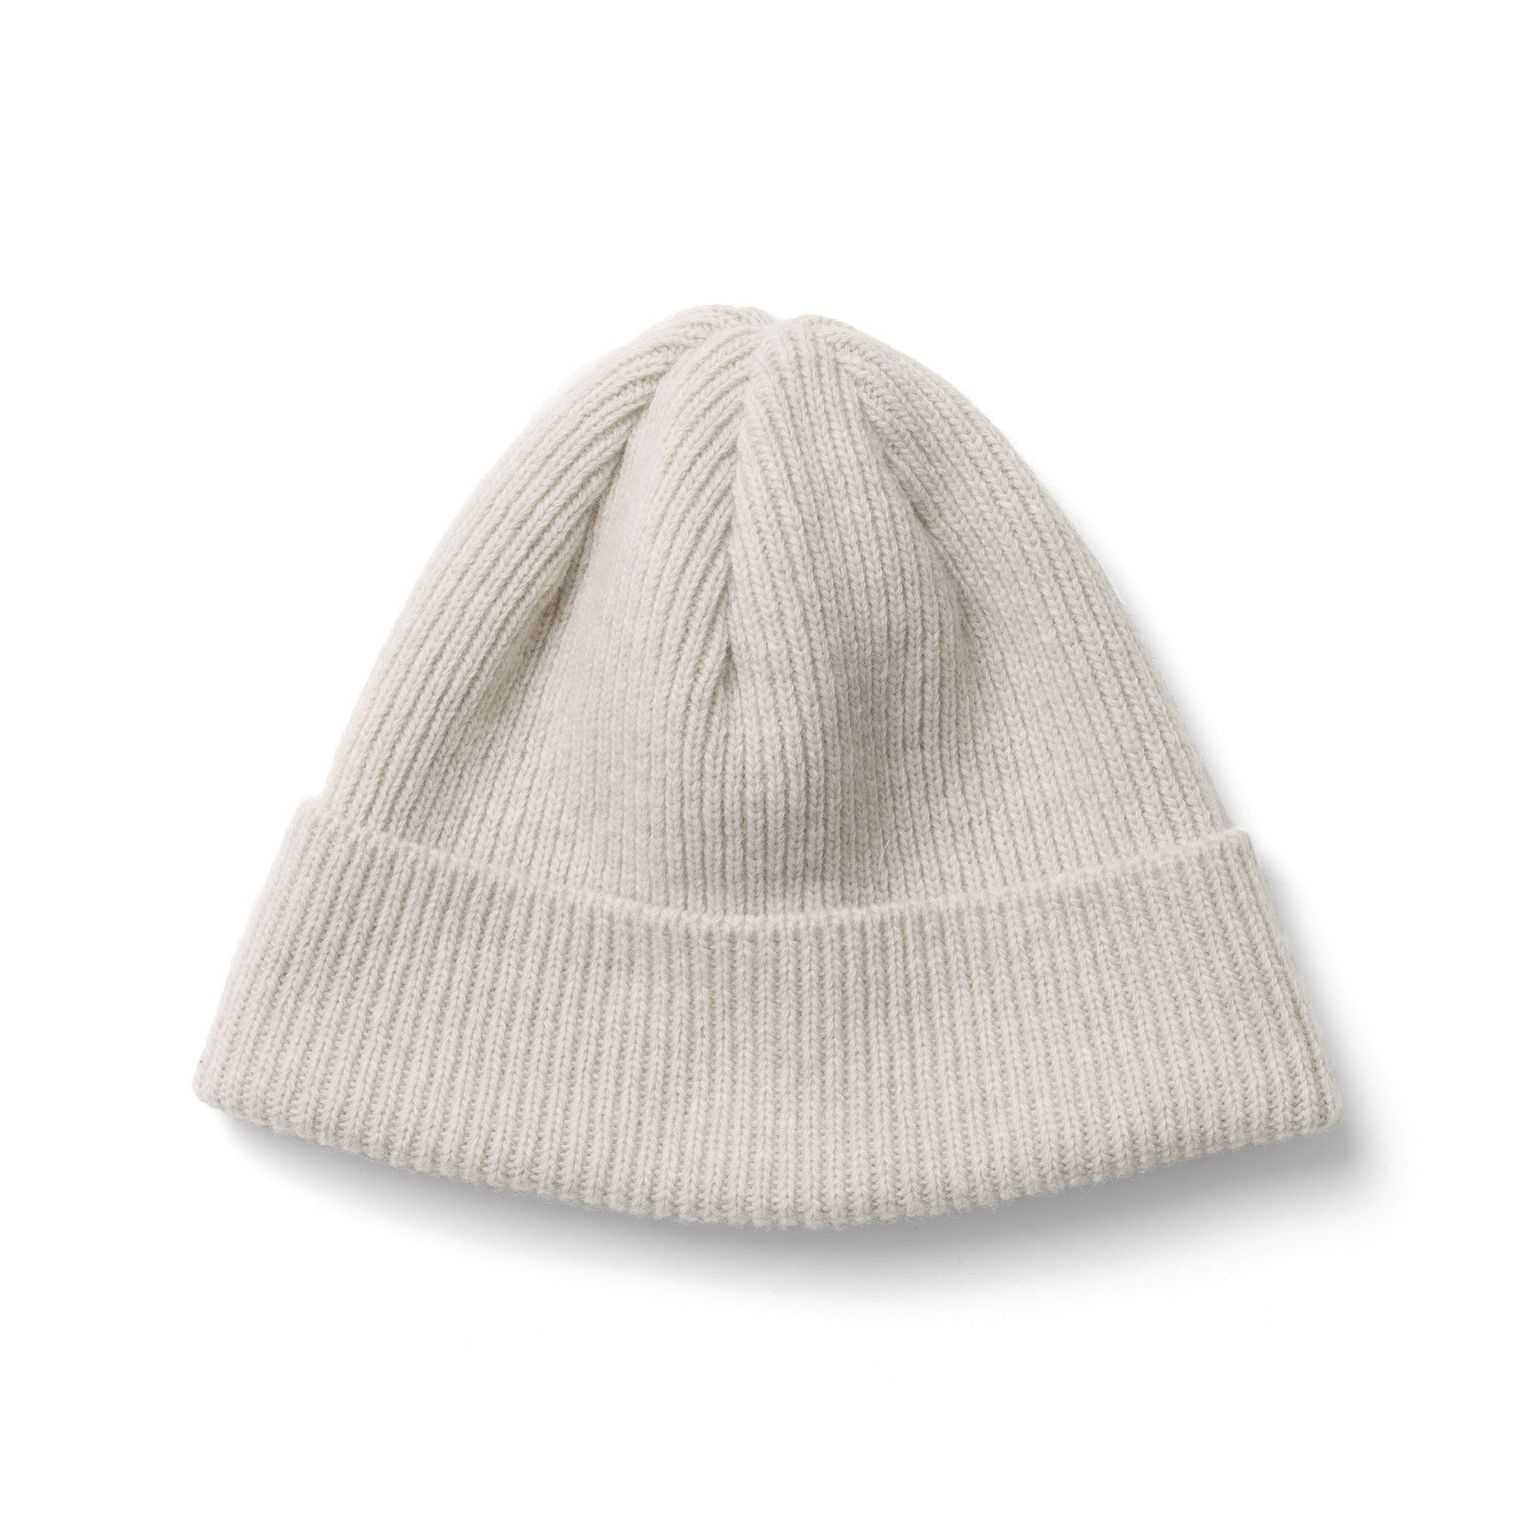 Hut Hat wheat white